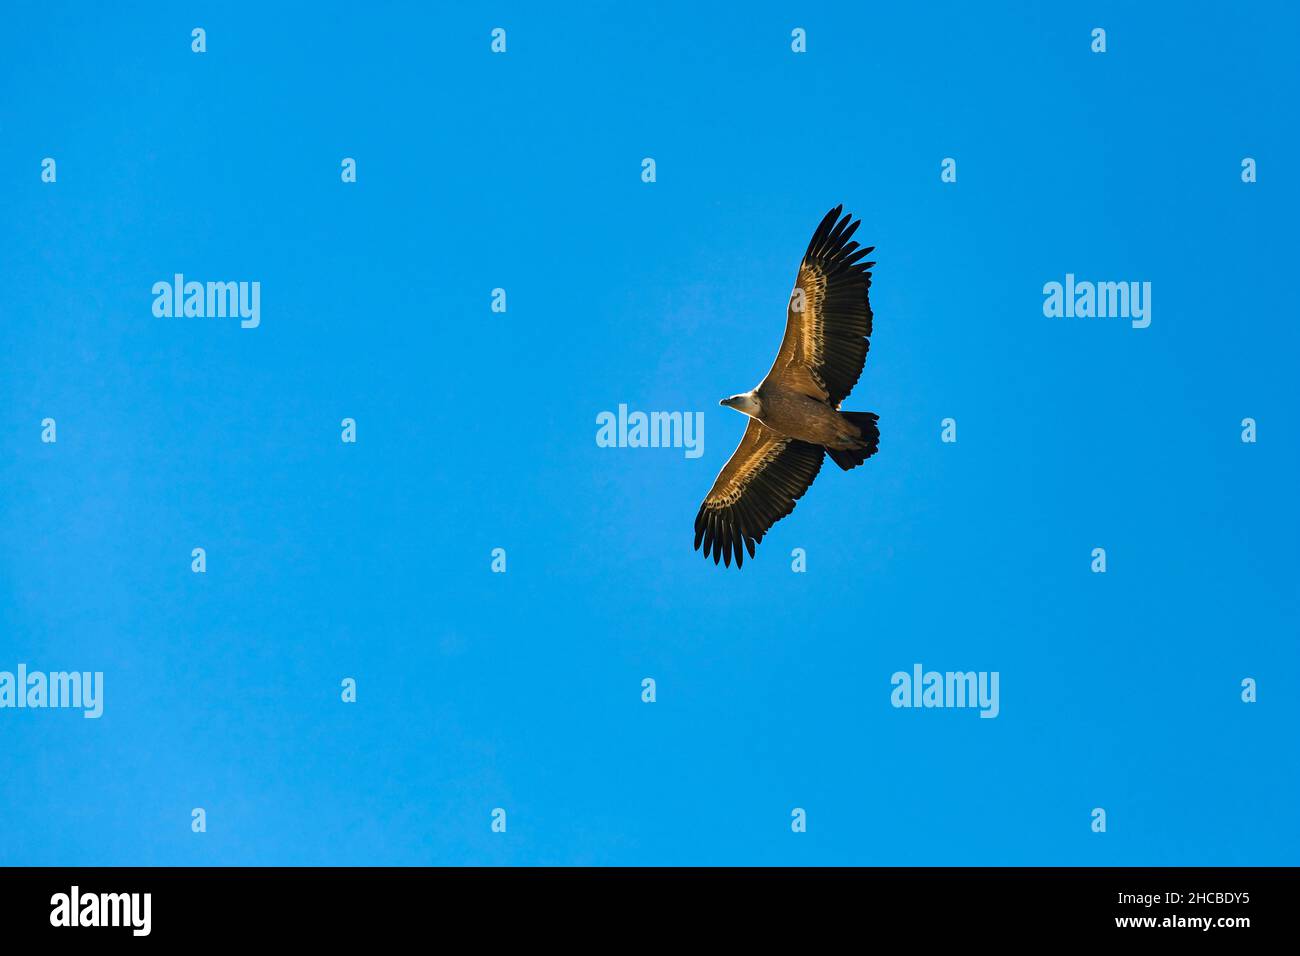 Aigle volant contre un ciel bleu clair Banque D'Images